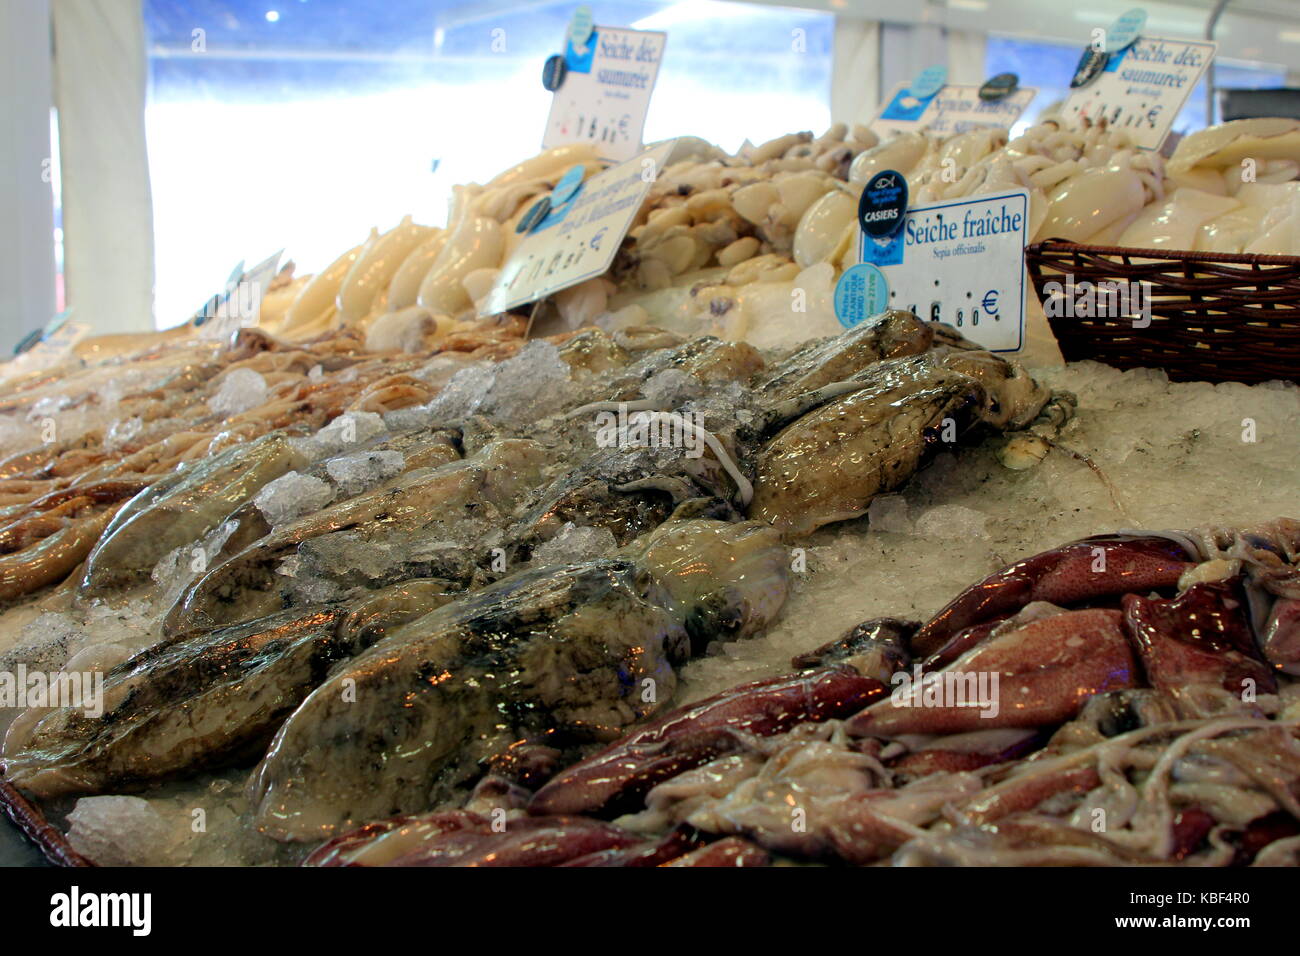 Whole fresh cuttlefish (Seiche fraiche)  for sale at a French fishmonger Stock Photo